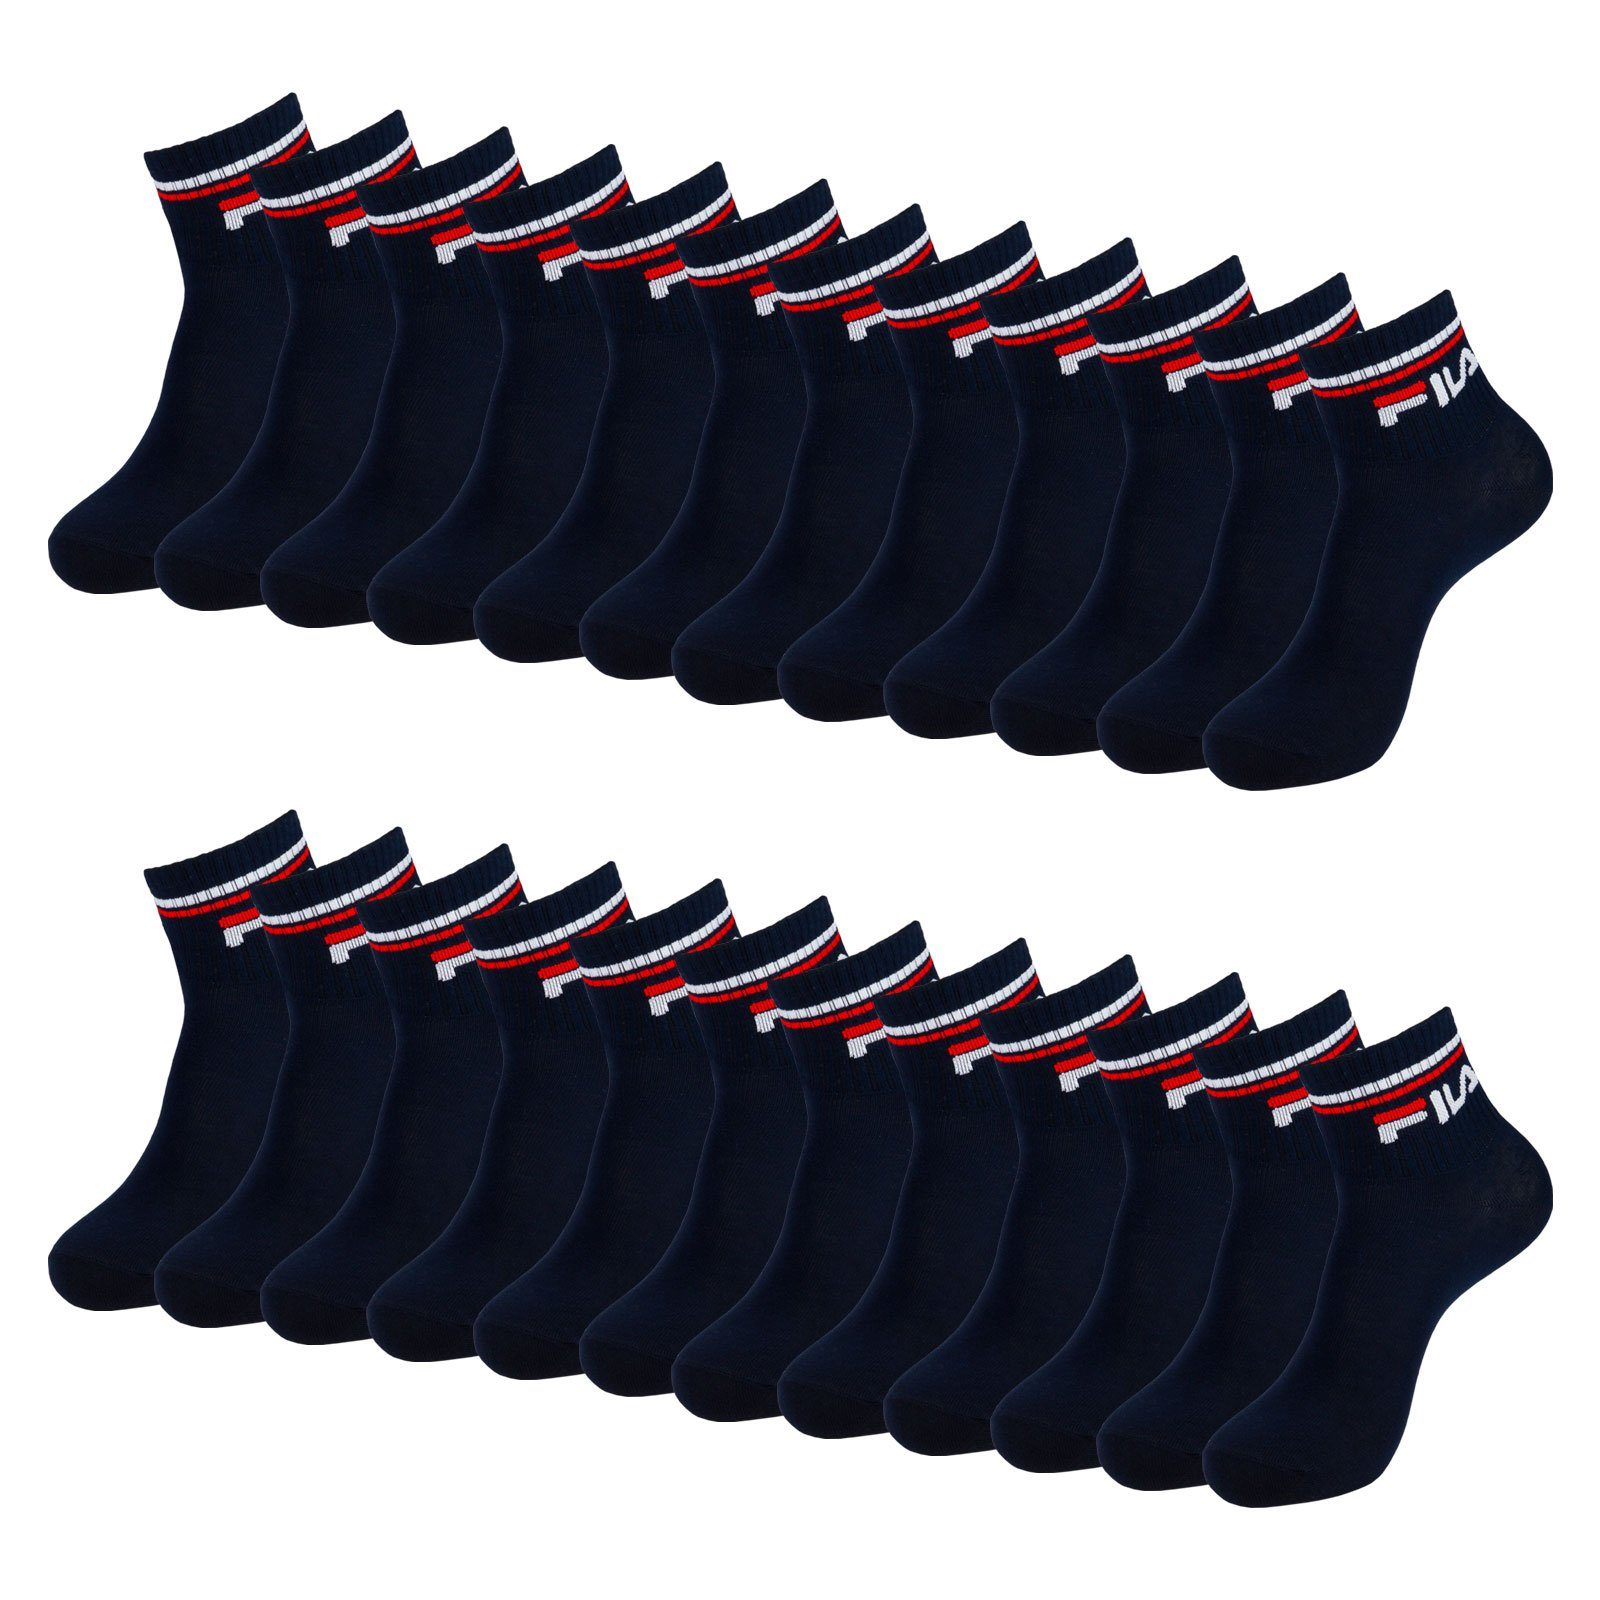 Fila Kurzsocken »Quarter Socks Calza« (12-Paar) im sportlichen Look mit  Rippbündchen